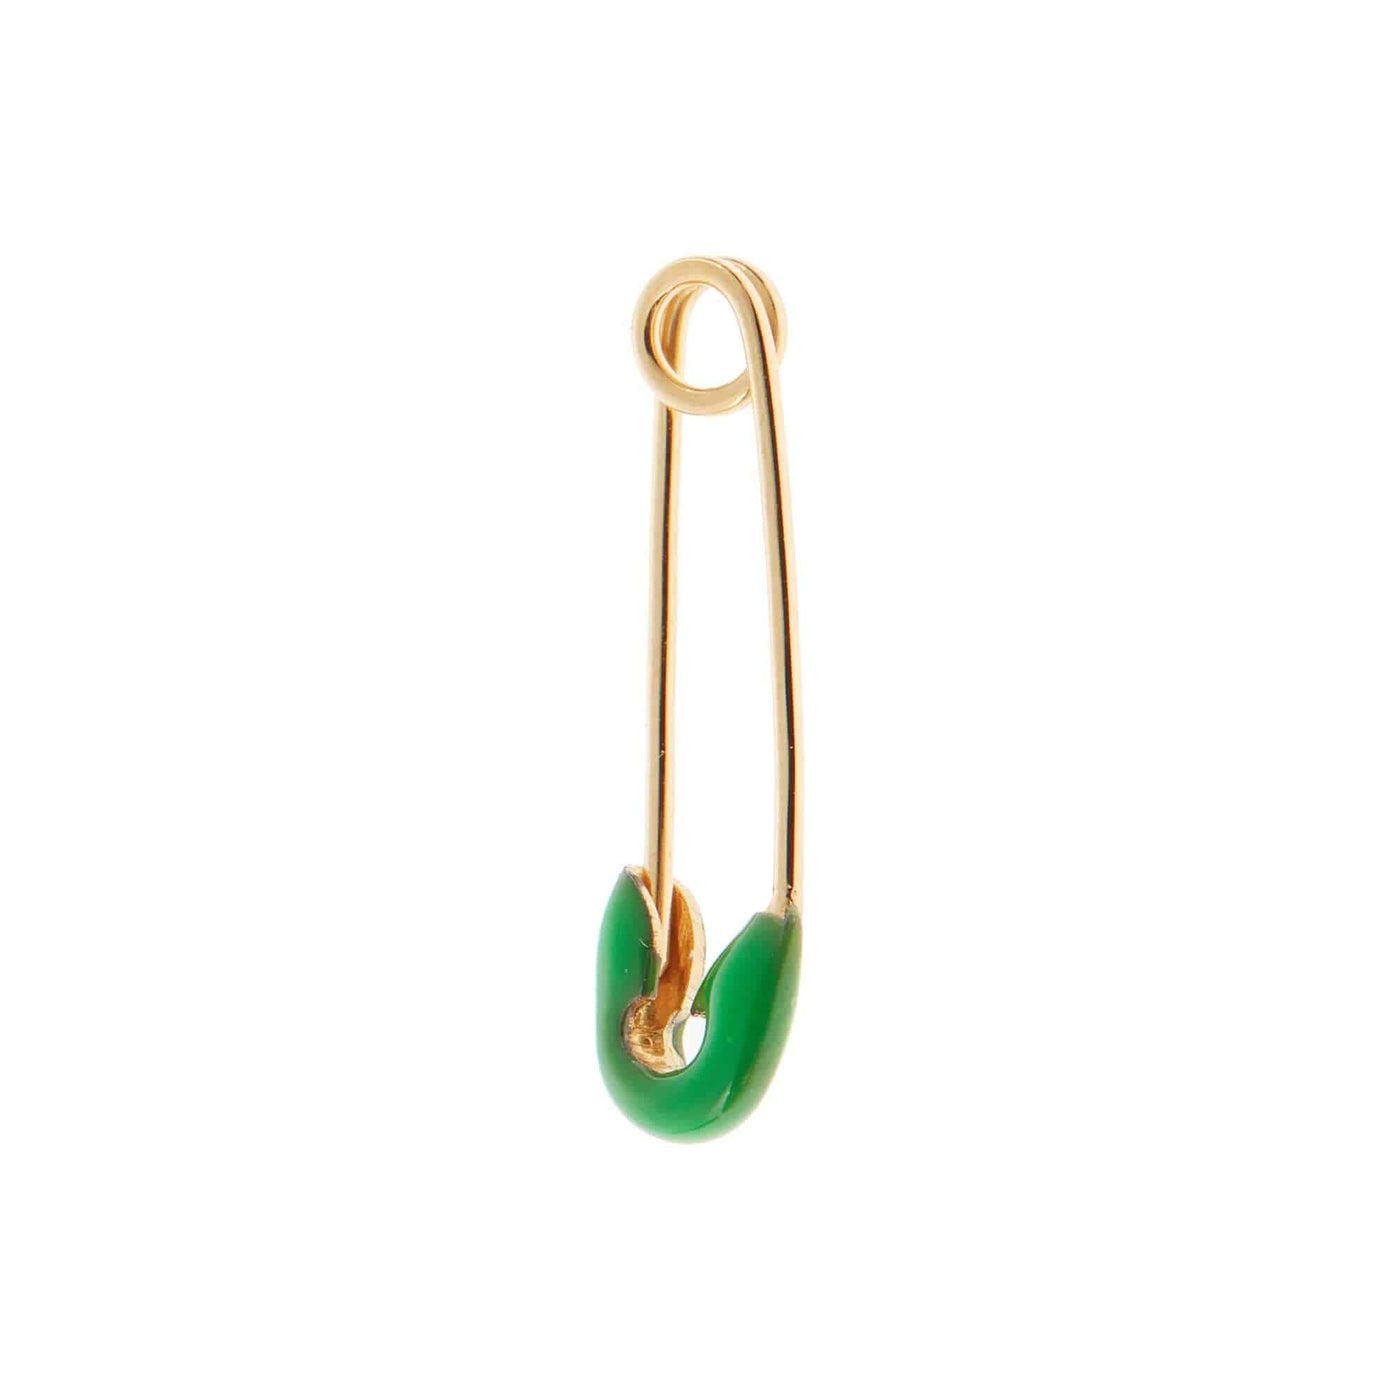 Neon Green Enamel Safety Pin Earring - Eye M Safety Pins - Ileana Makri store